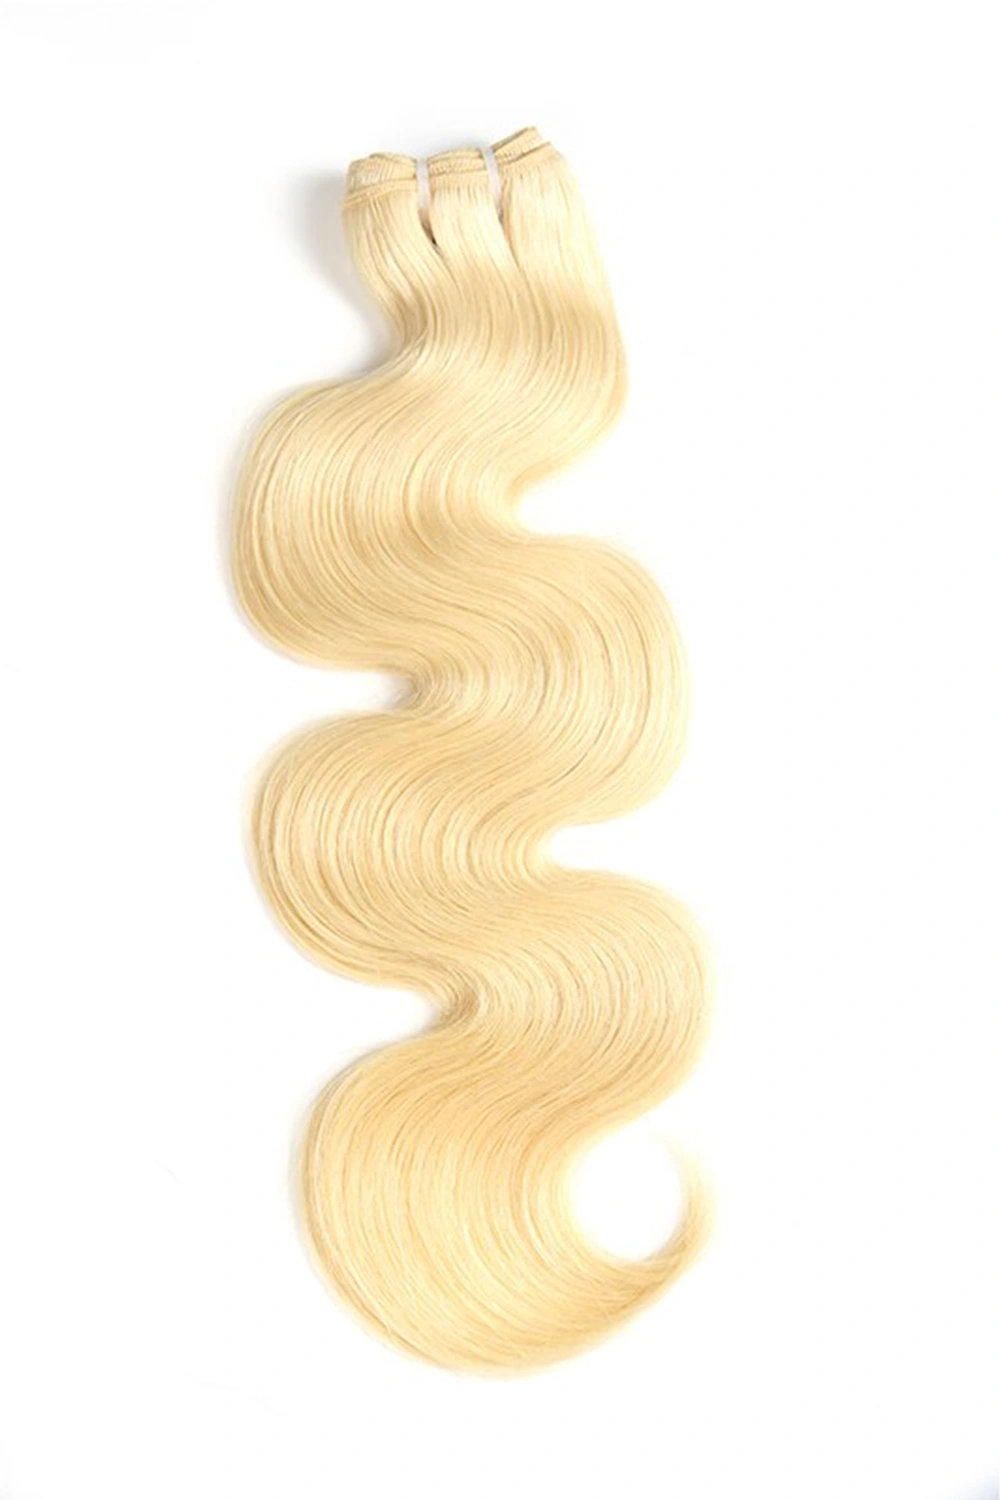 613 Blonde Bundles Double Weft Sew-in Extensions Body Wave Virgin Hair